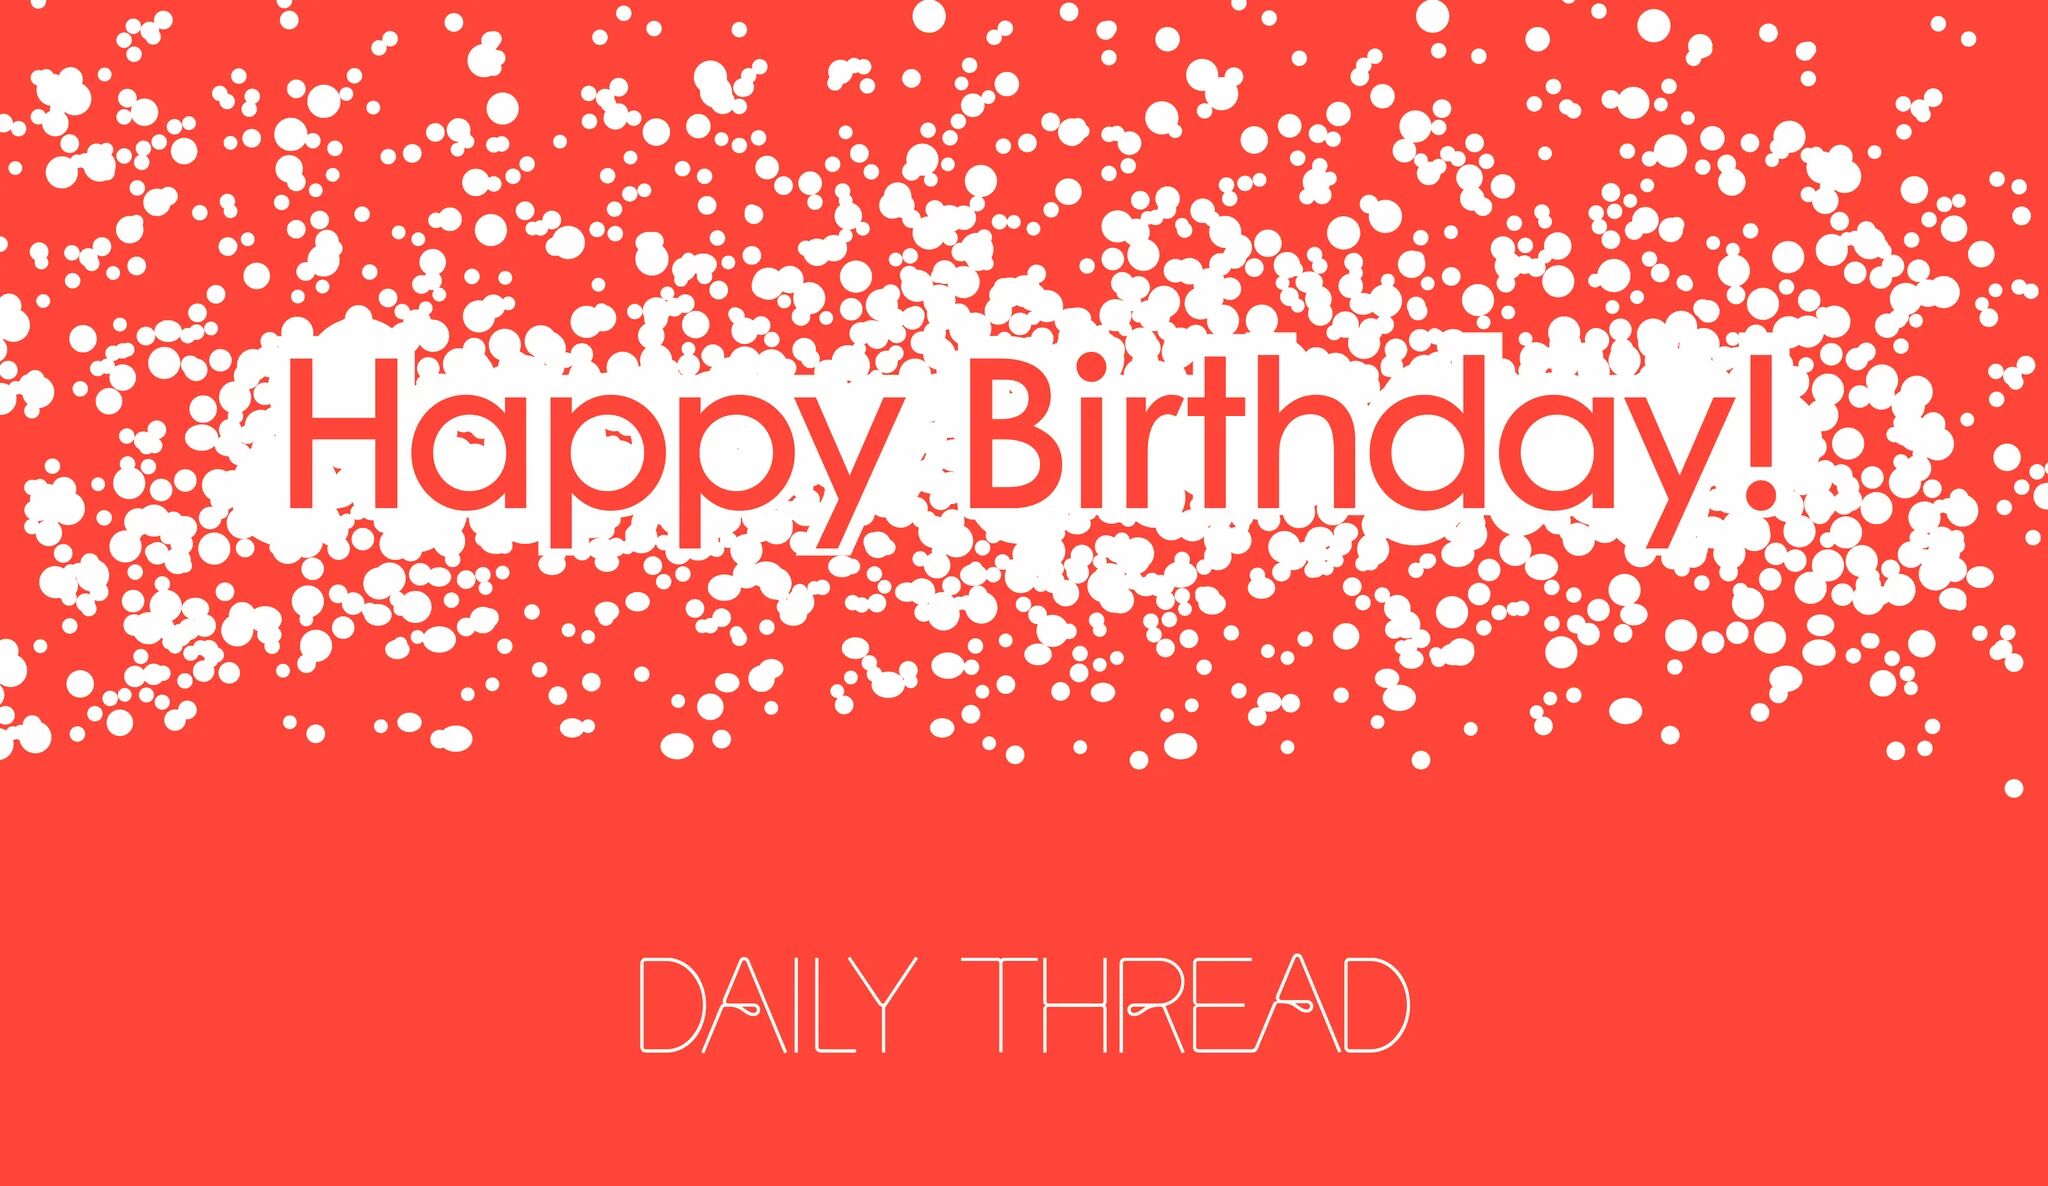 Daily Thread Gift Card-Birthday